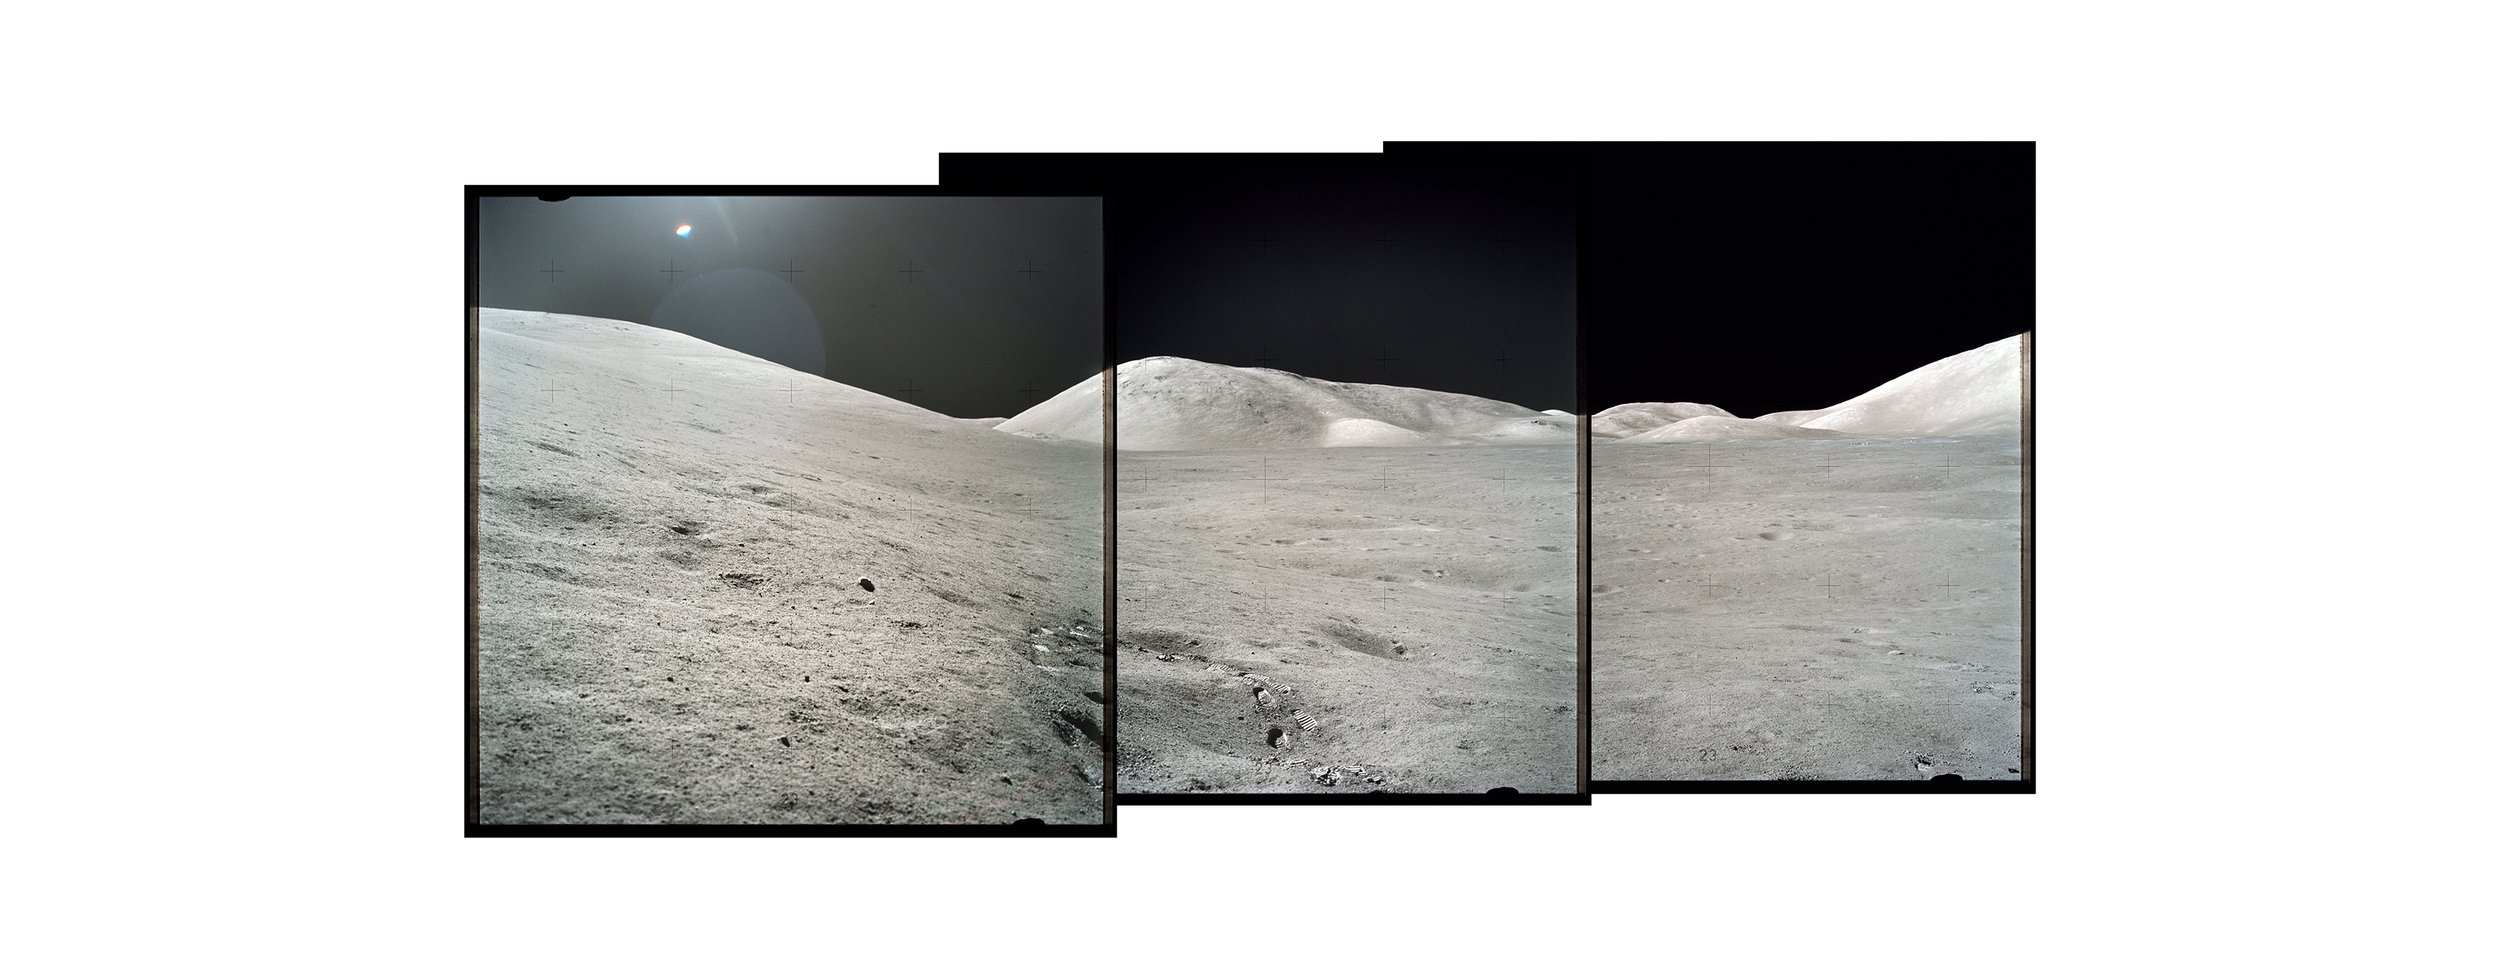  Taurus-Littrow Valley, astronaut’s footprints (115x60)Apollo 17 Magazine 146/F - NASA photographs 1972 